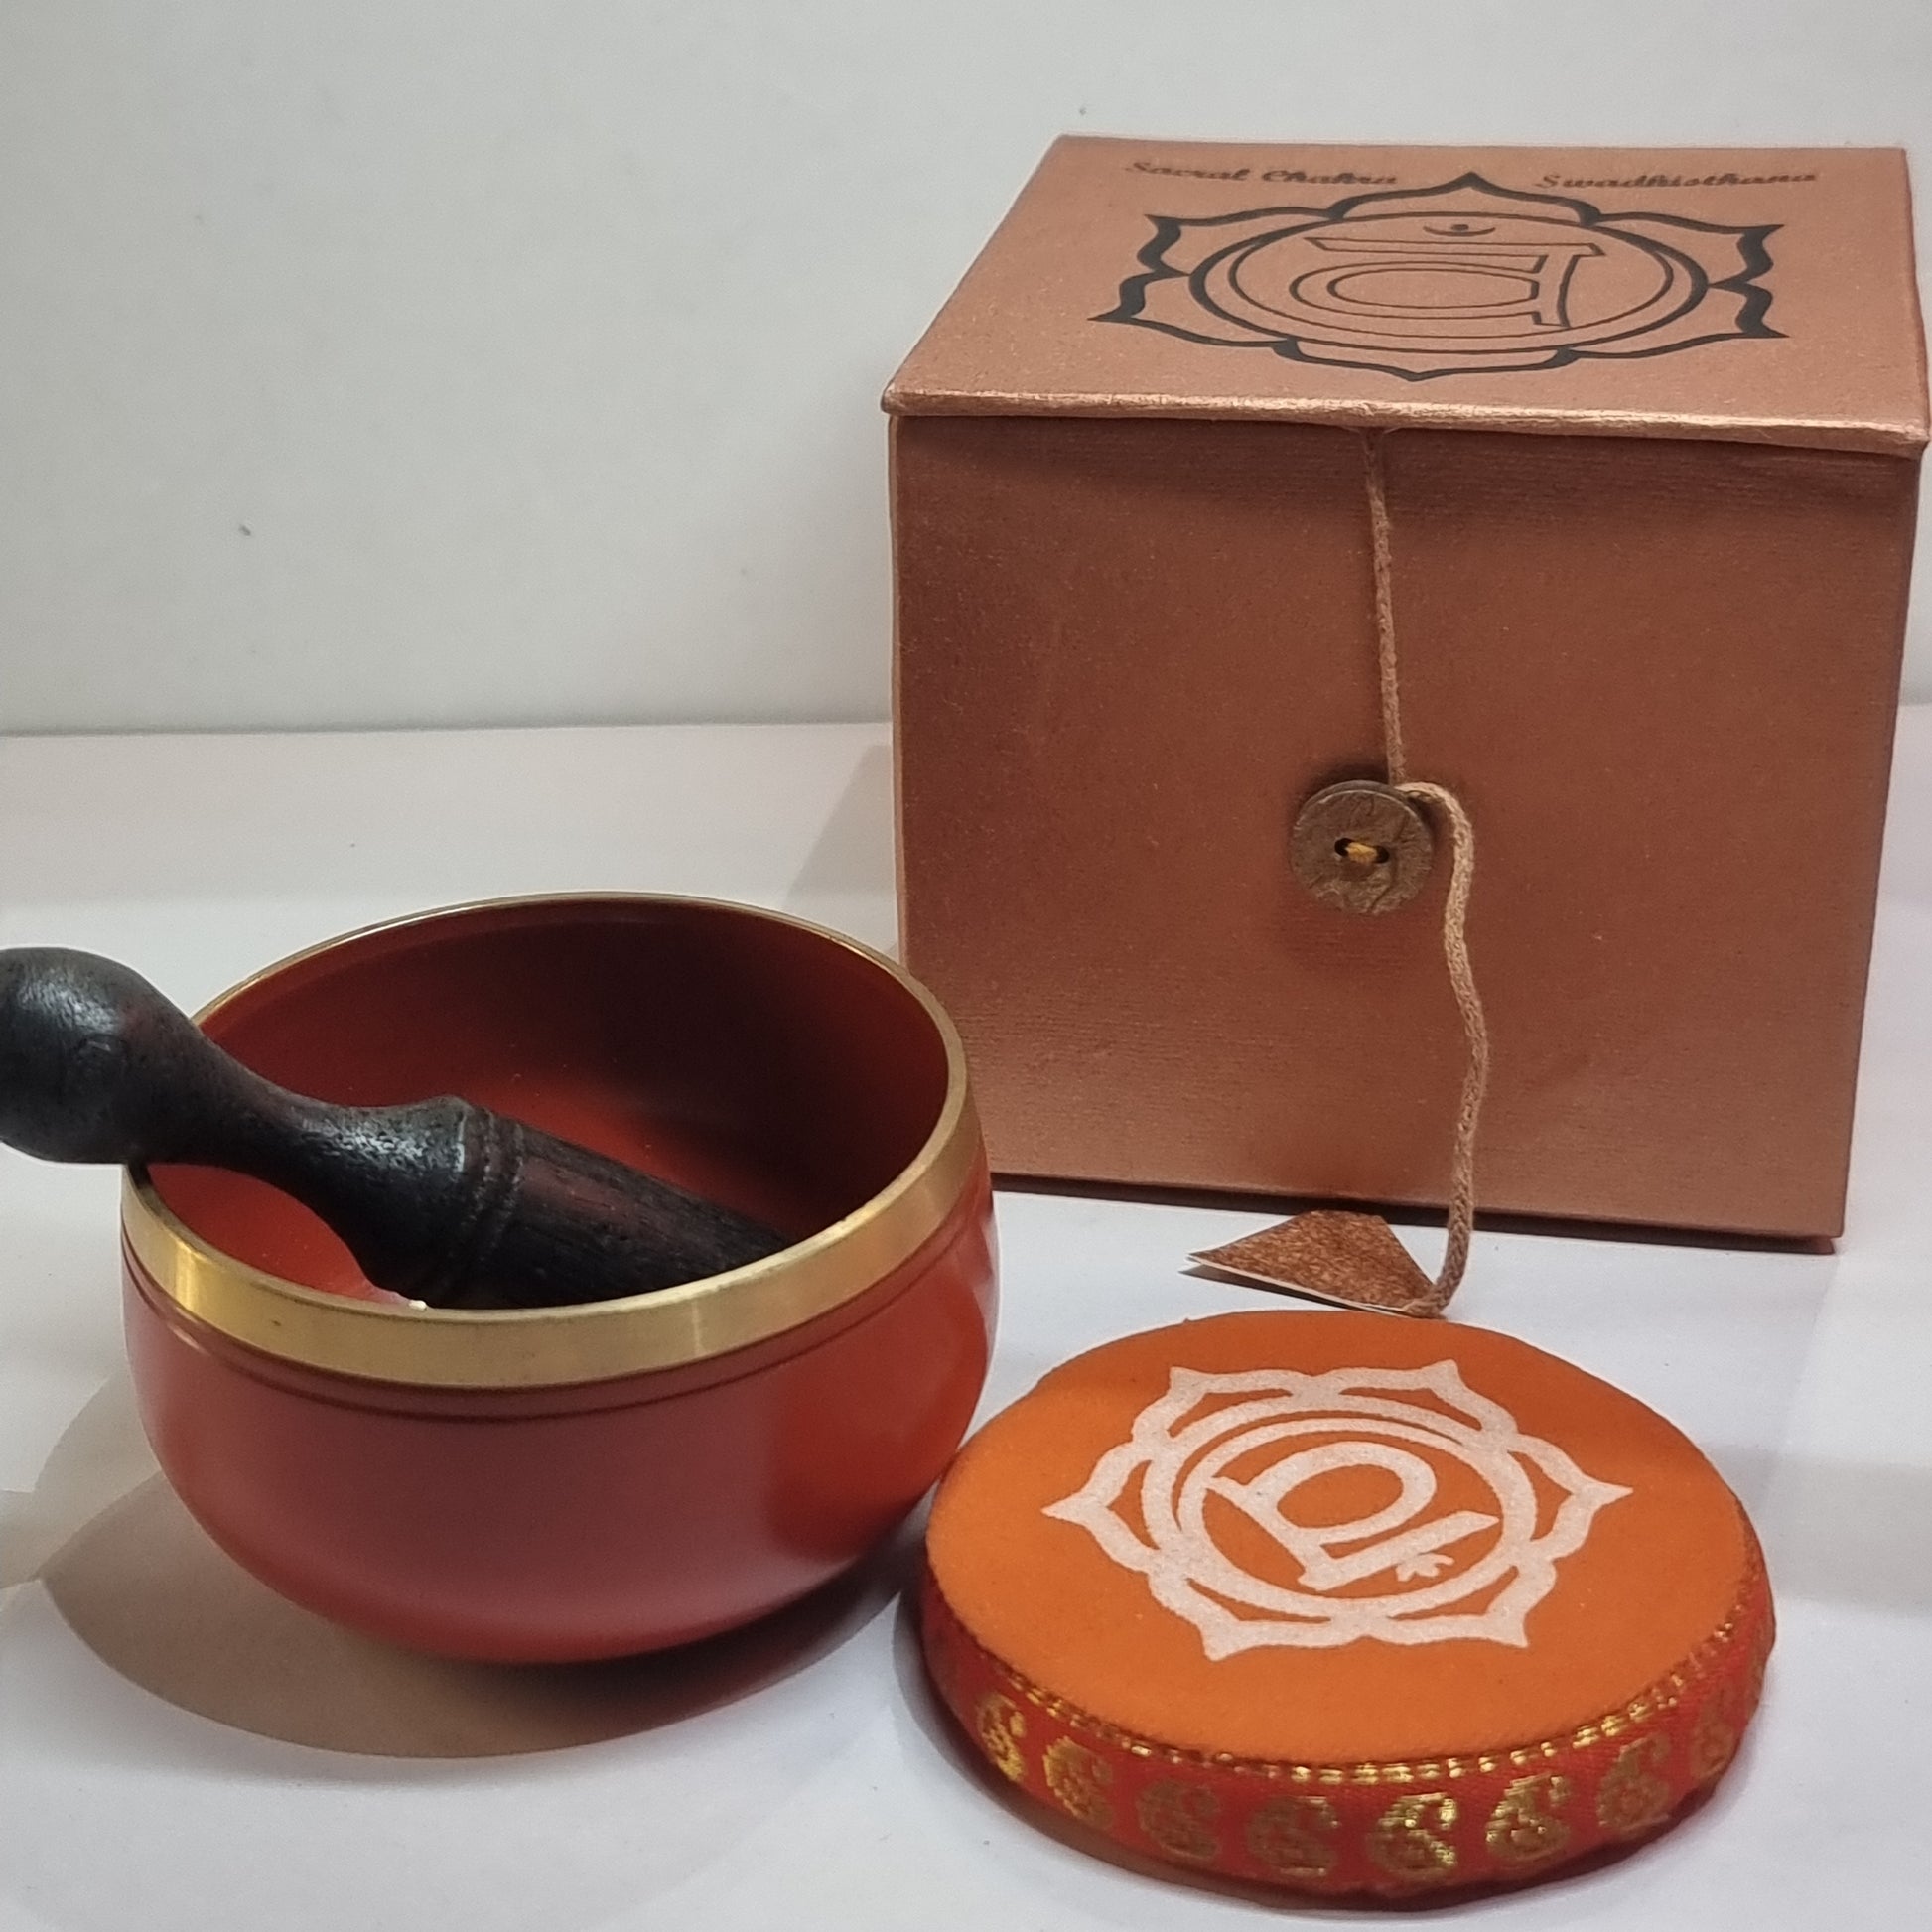 Singing bowl gift set - sacral chakra - Rivendell Shop